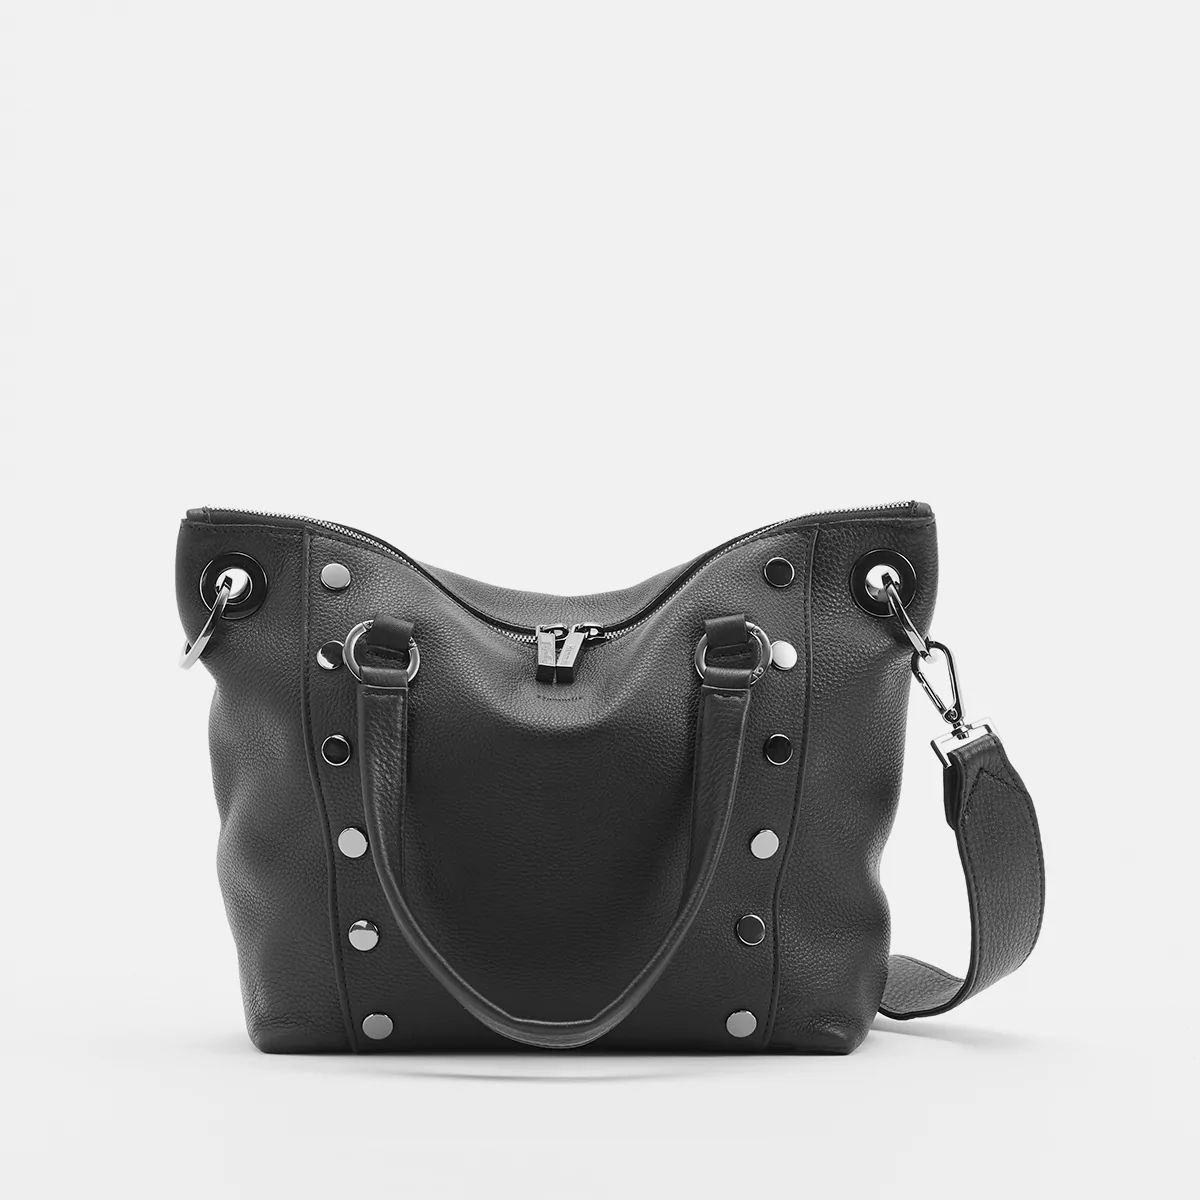 Daniel Black | Women's Everyday Leather Satchel Bag | Hammitt | Hammitt (US)